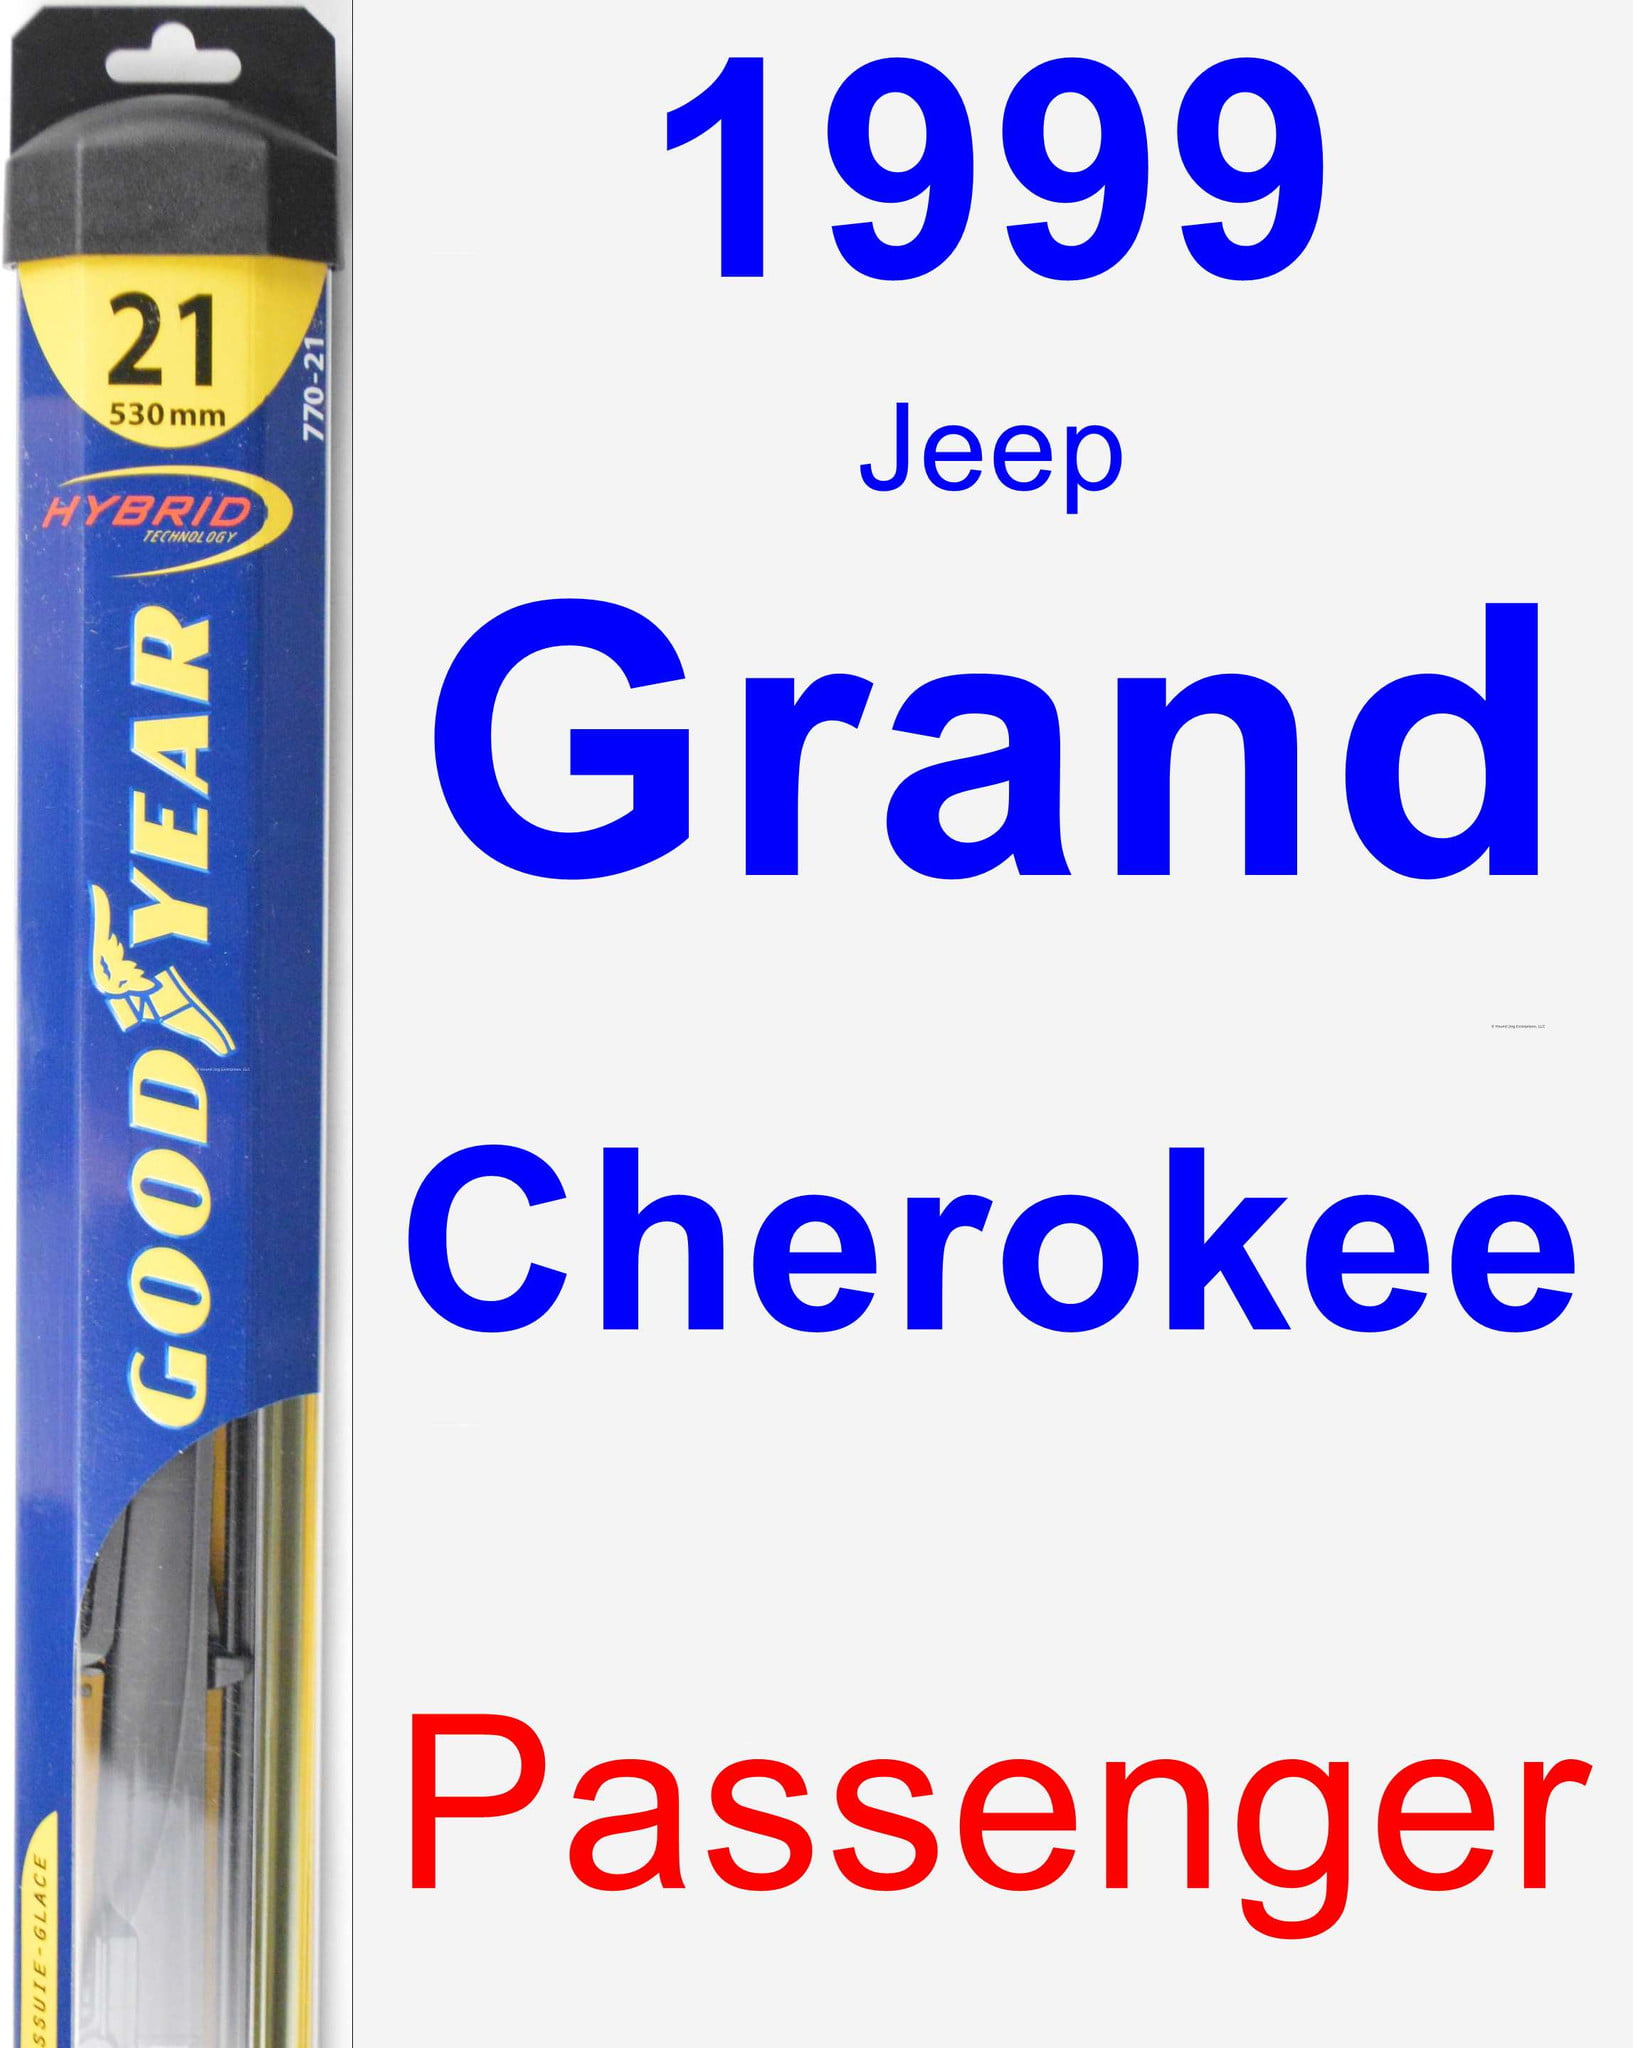 1999 Jeep Grand Cherokee Passenger Wiper Blade - Hybrid - Walmart.com - Walmart.com 1999 Jeep Grand Cherokee Windshield Wiper Size